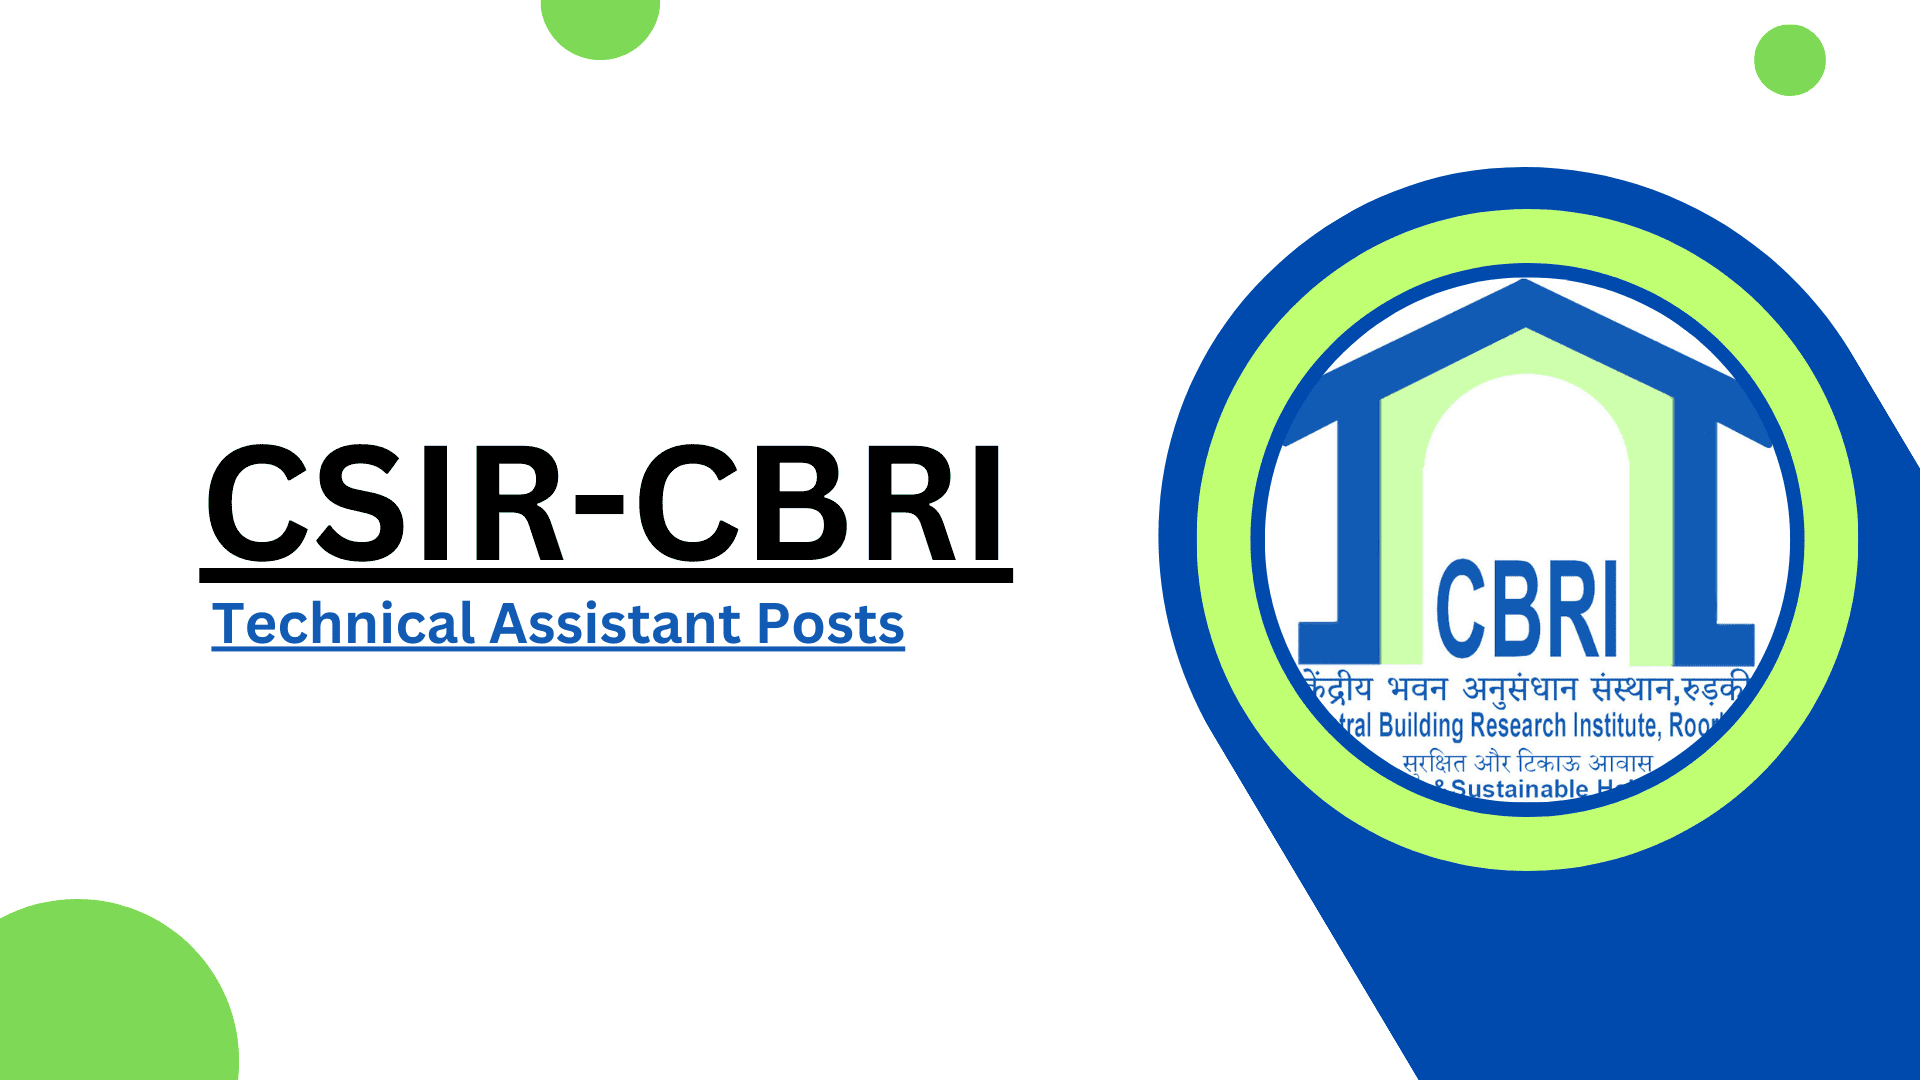 CSIR CBRI Technical Assistant Recruitment 2024